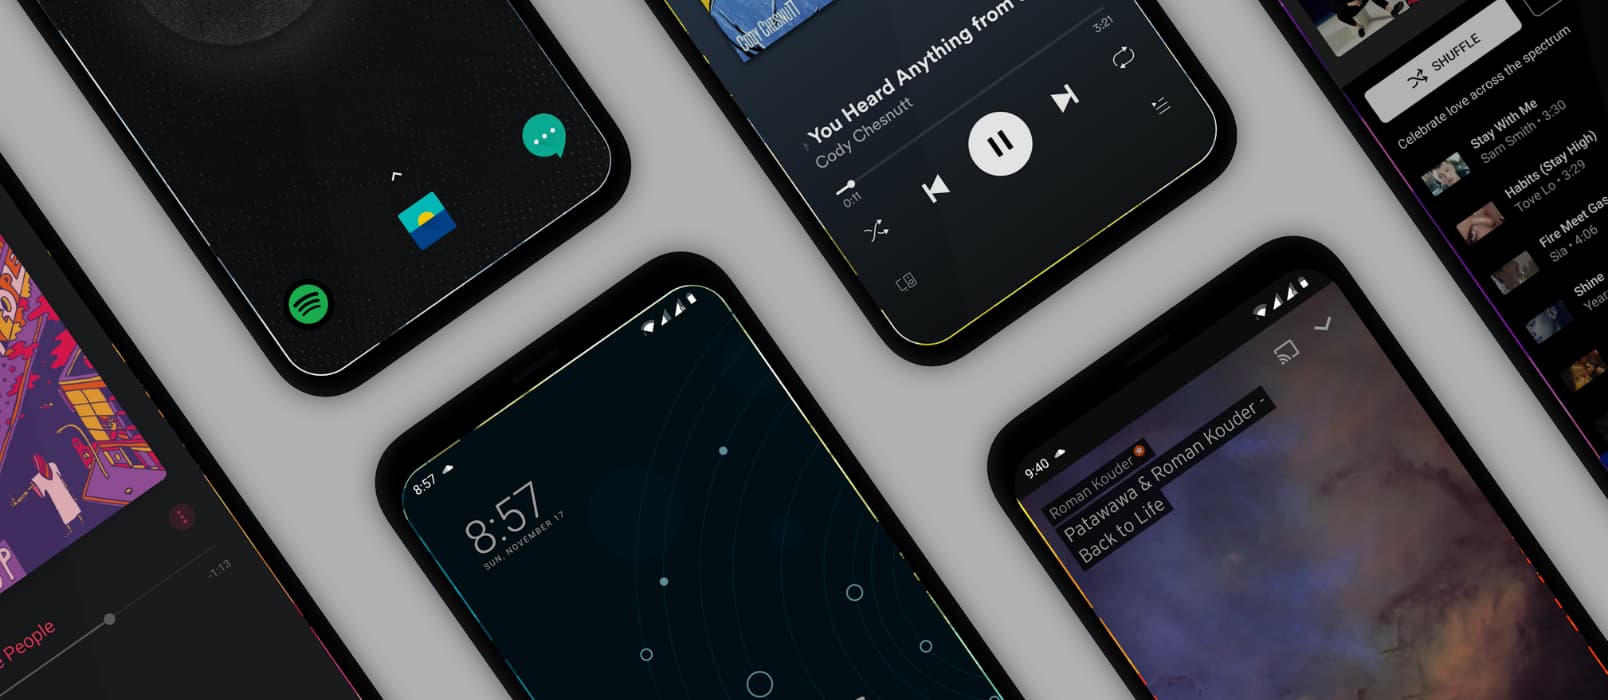 Muviz Edge - 利用屏幕边缘，可视化听歌[Android] 1